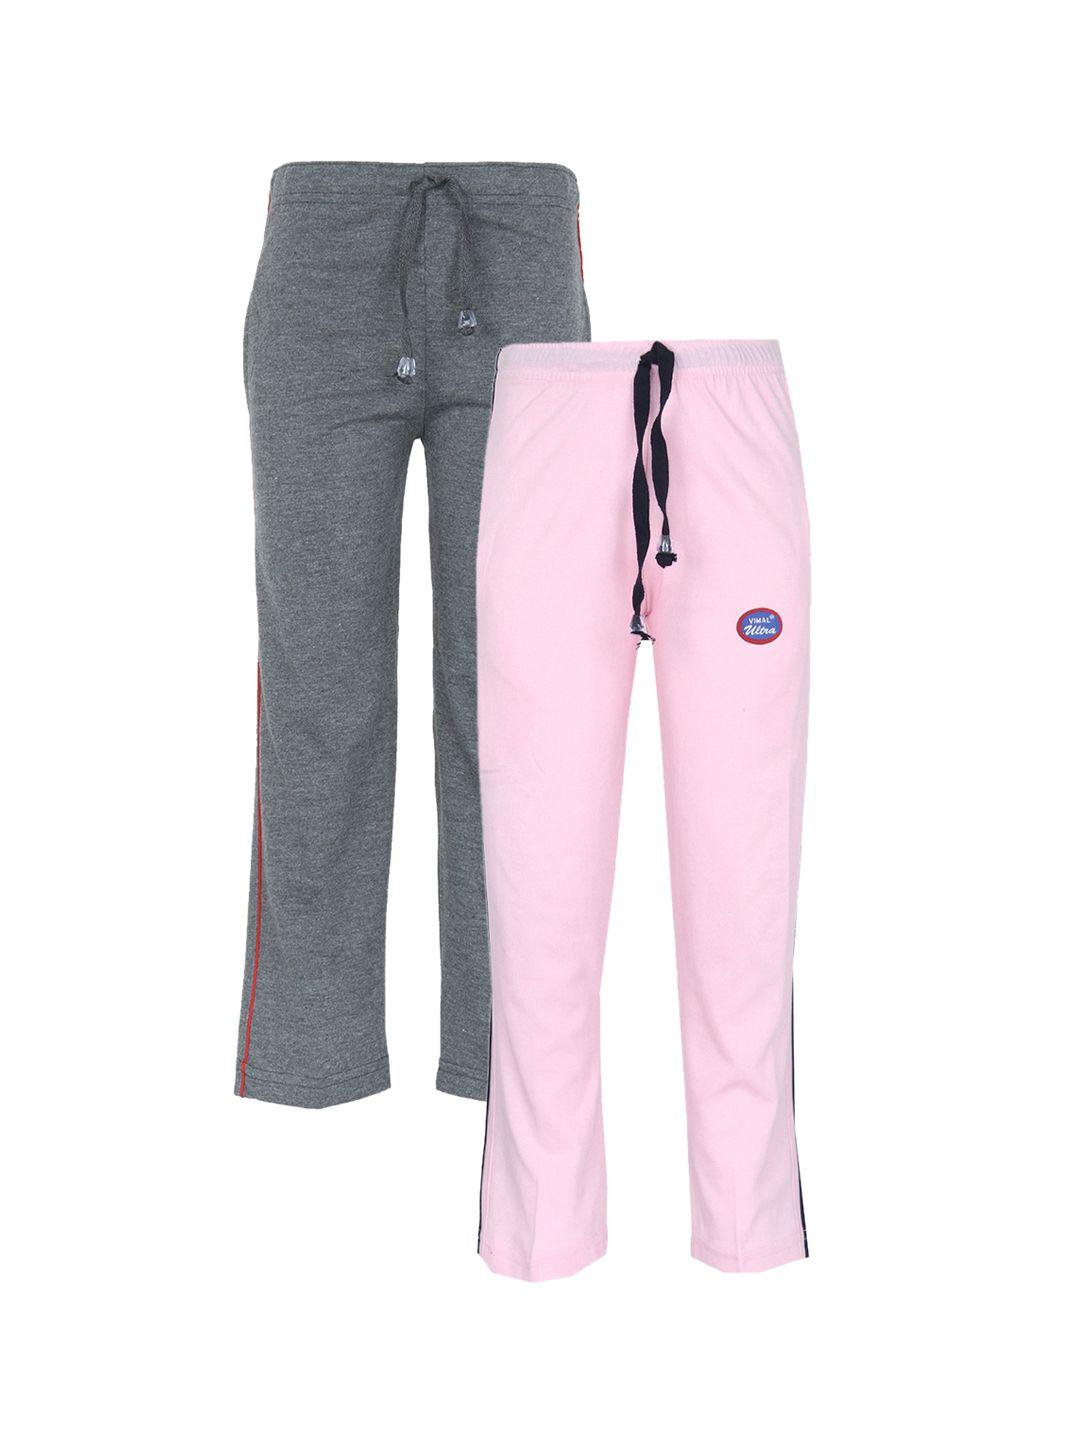 vimal jonney pack of 2 grey & pink track pants